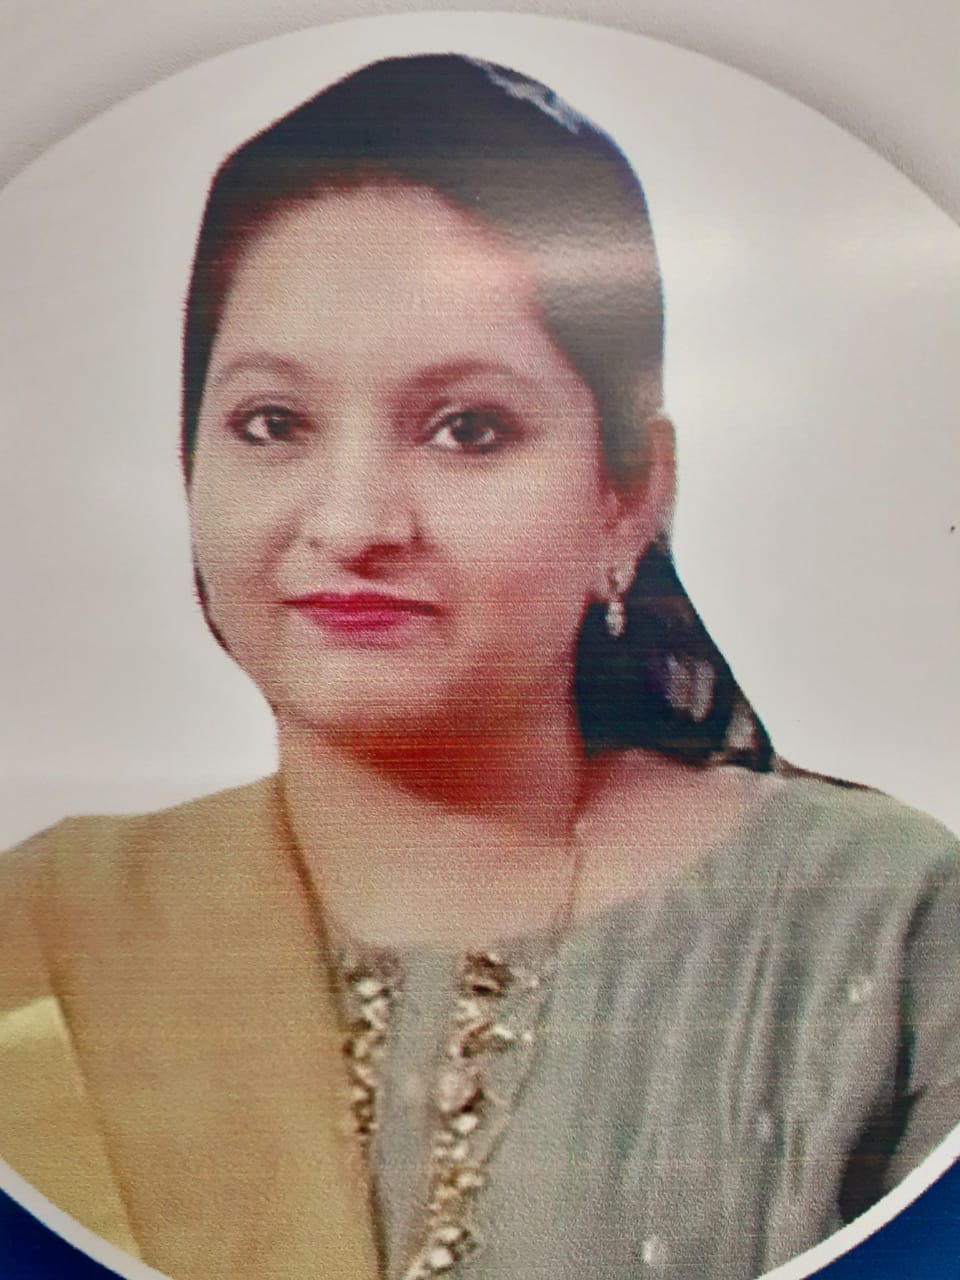 Dr. Ayesha Butool - Gynaecologist